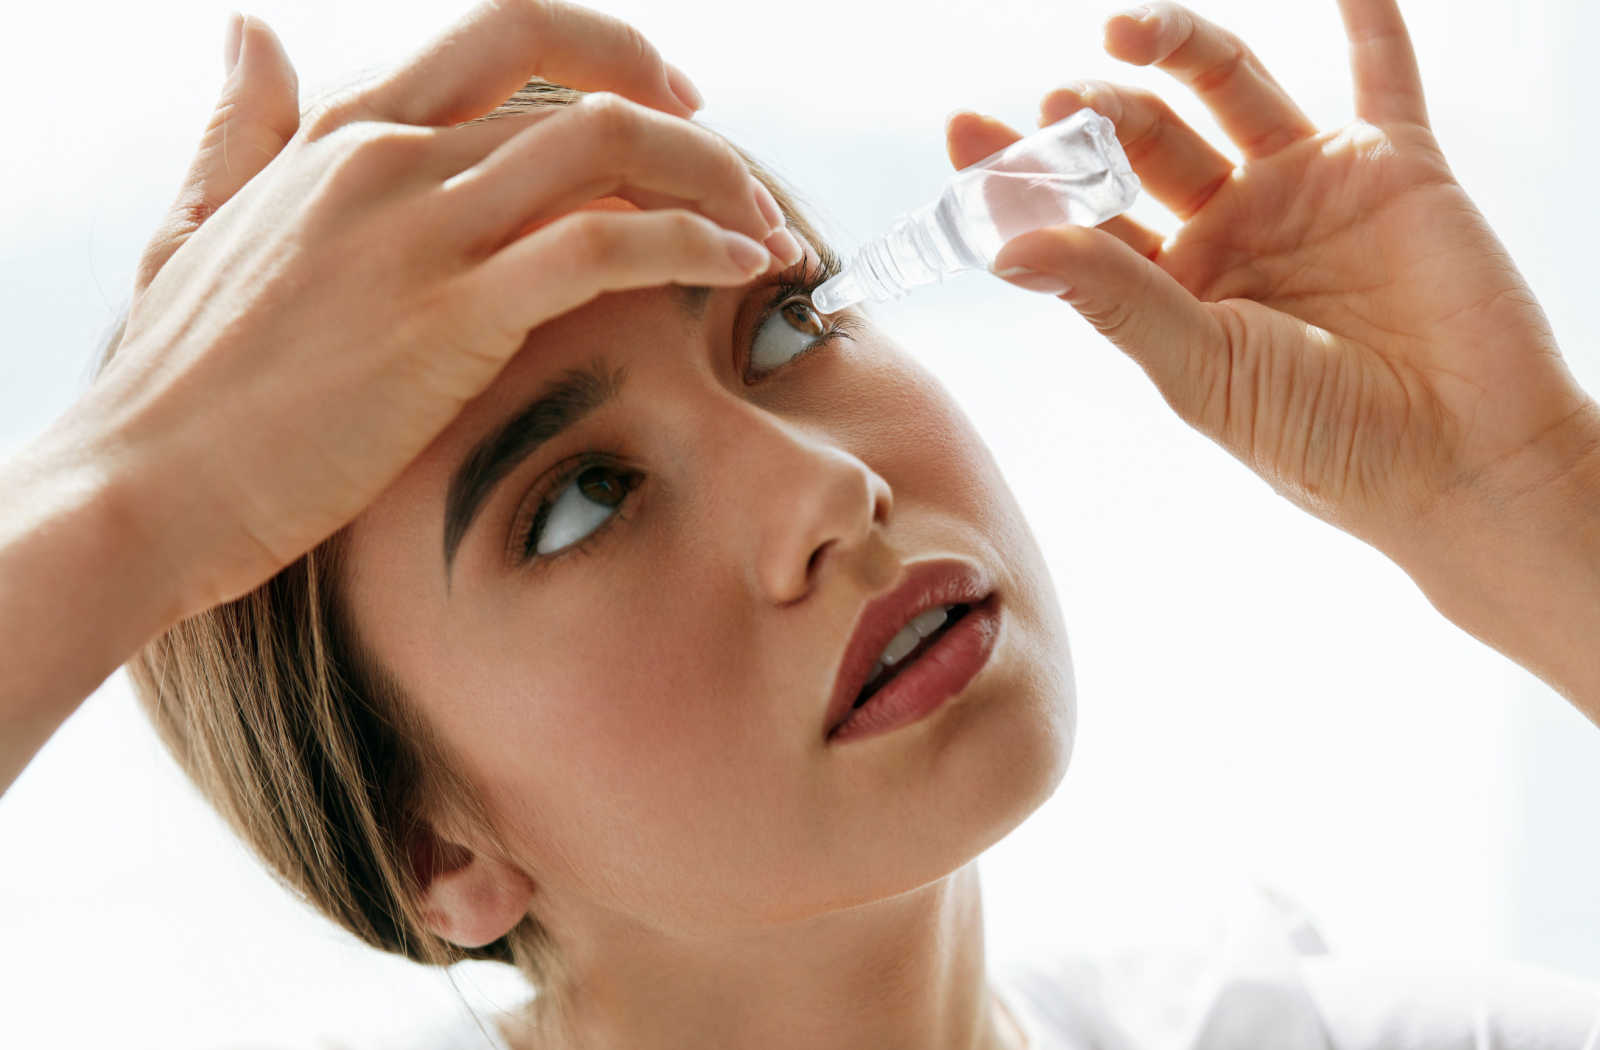 Woman putting eyedrops into her left eye.